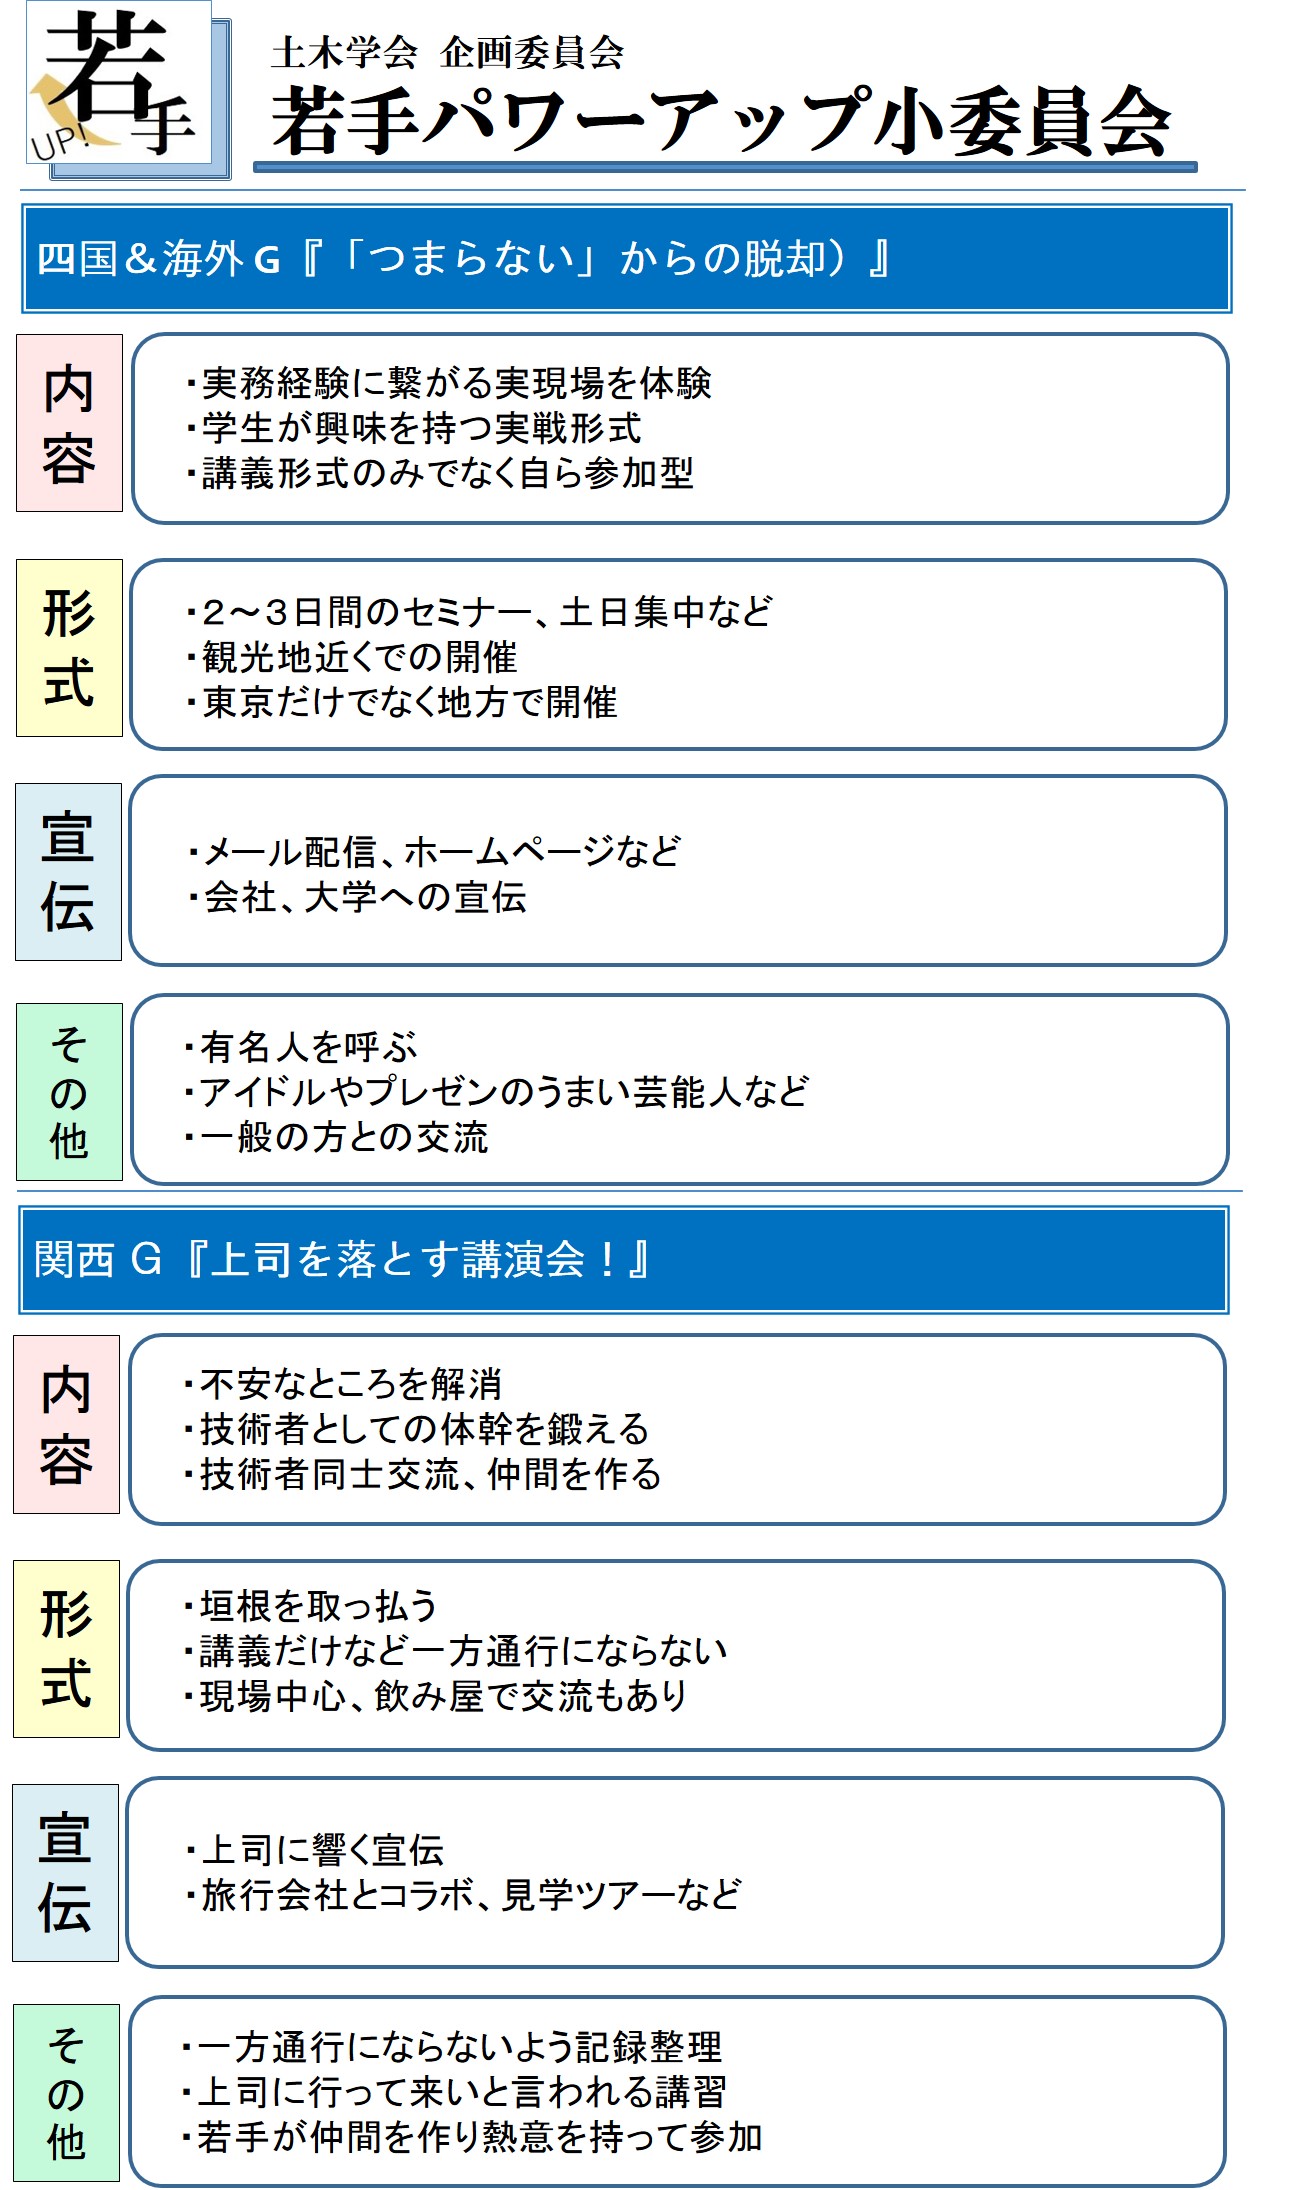 http://committees.jsce.or.jp/kikaku03/system/files/wakateactivity-5.jpg